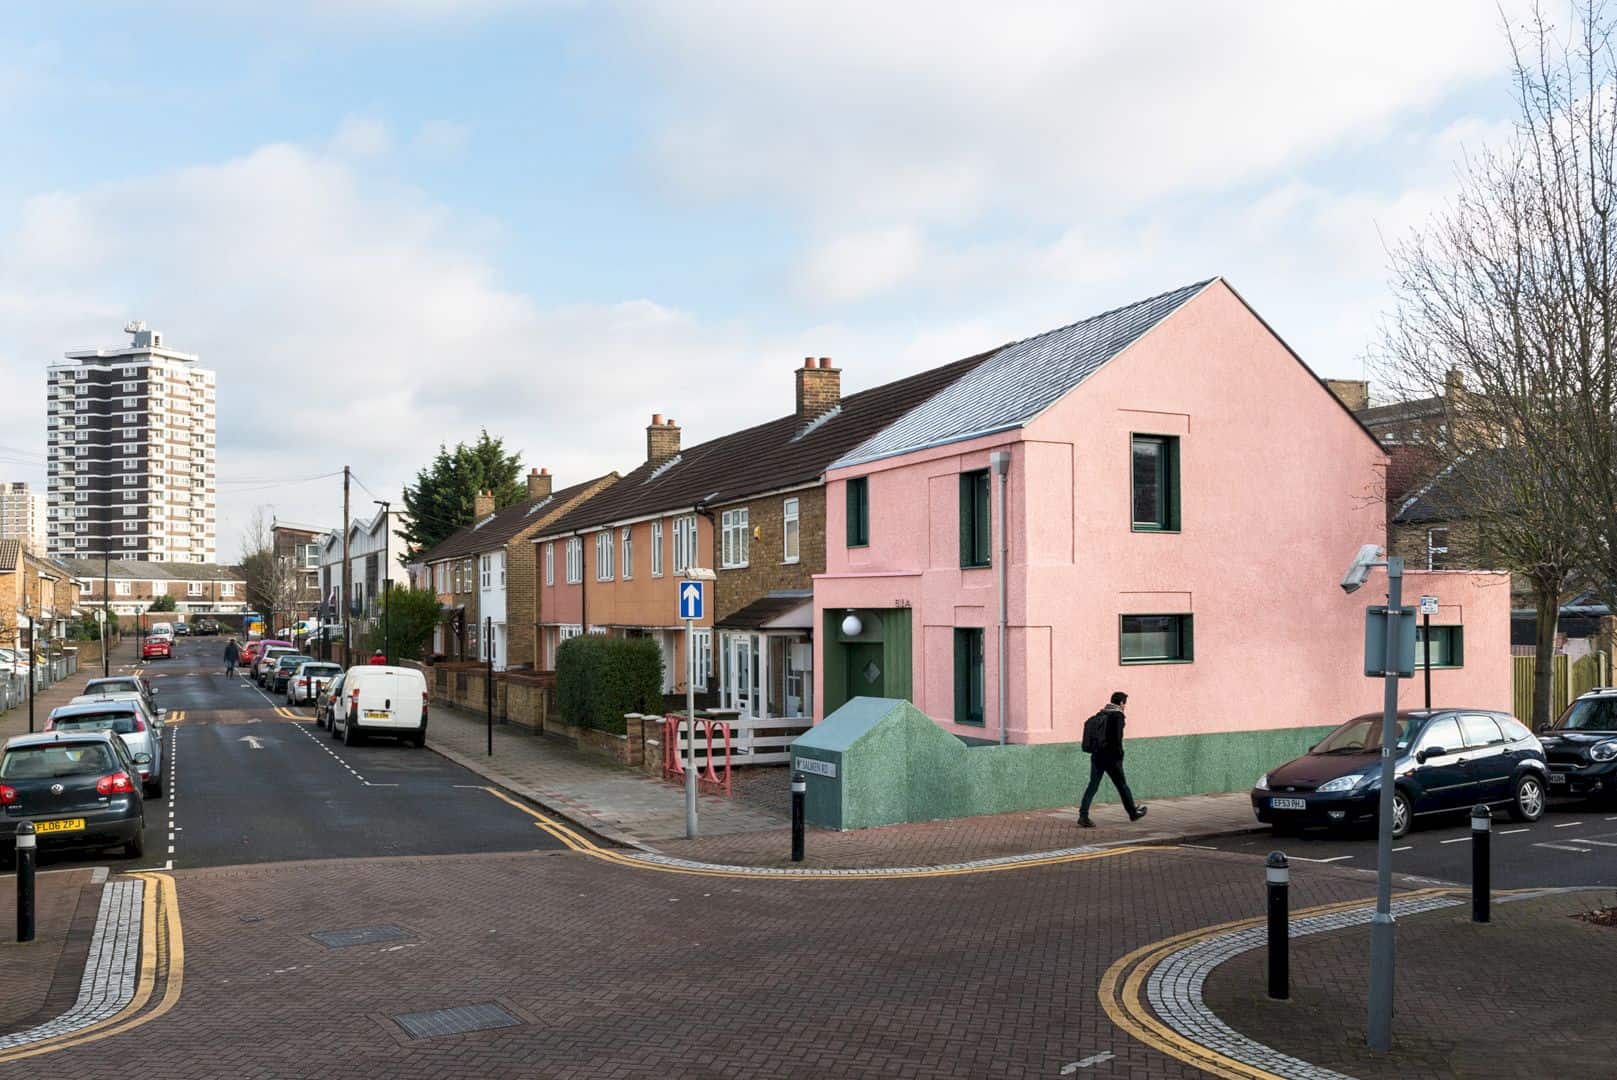 The Salmen House A Distincitve Pink And Green Rental Home In West Ham 9